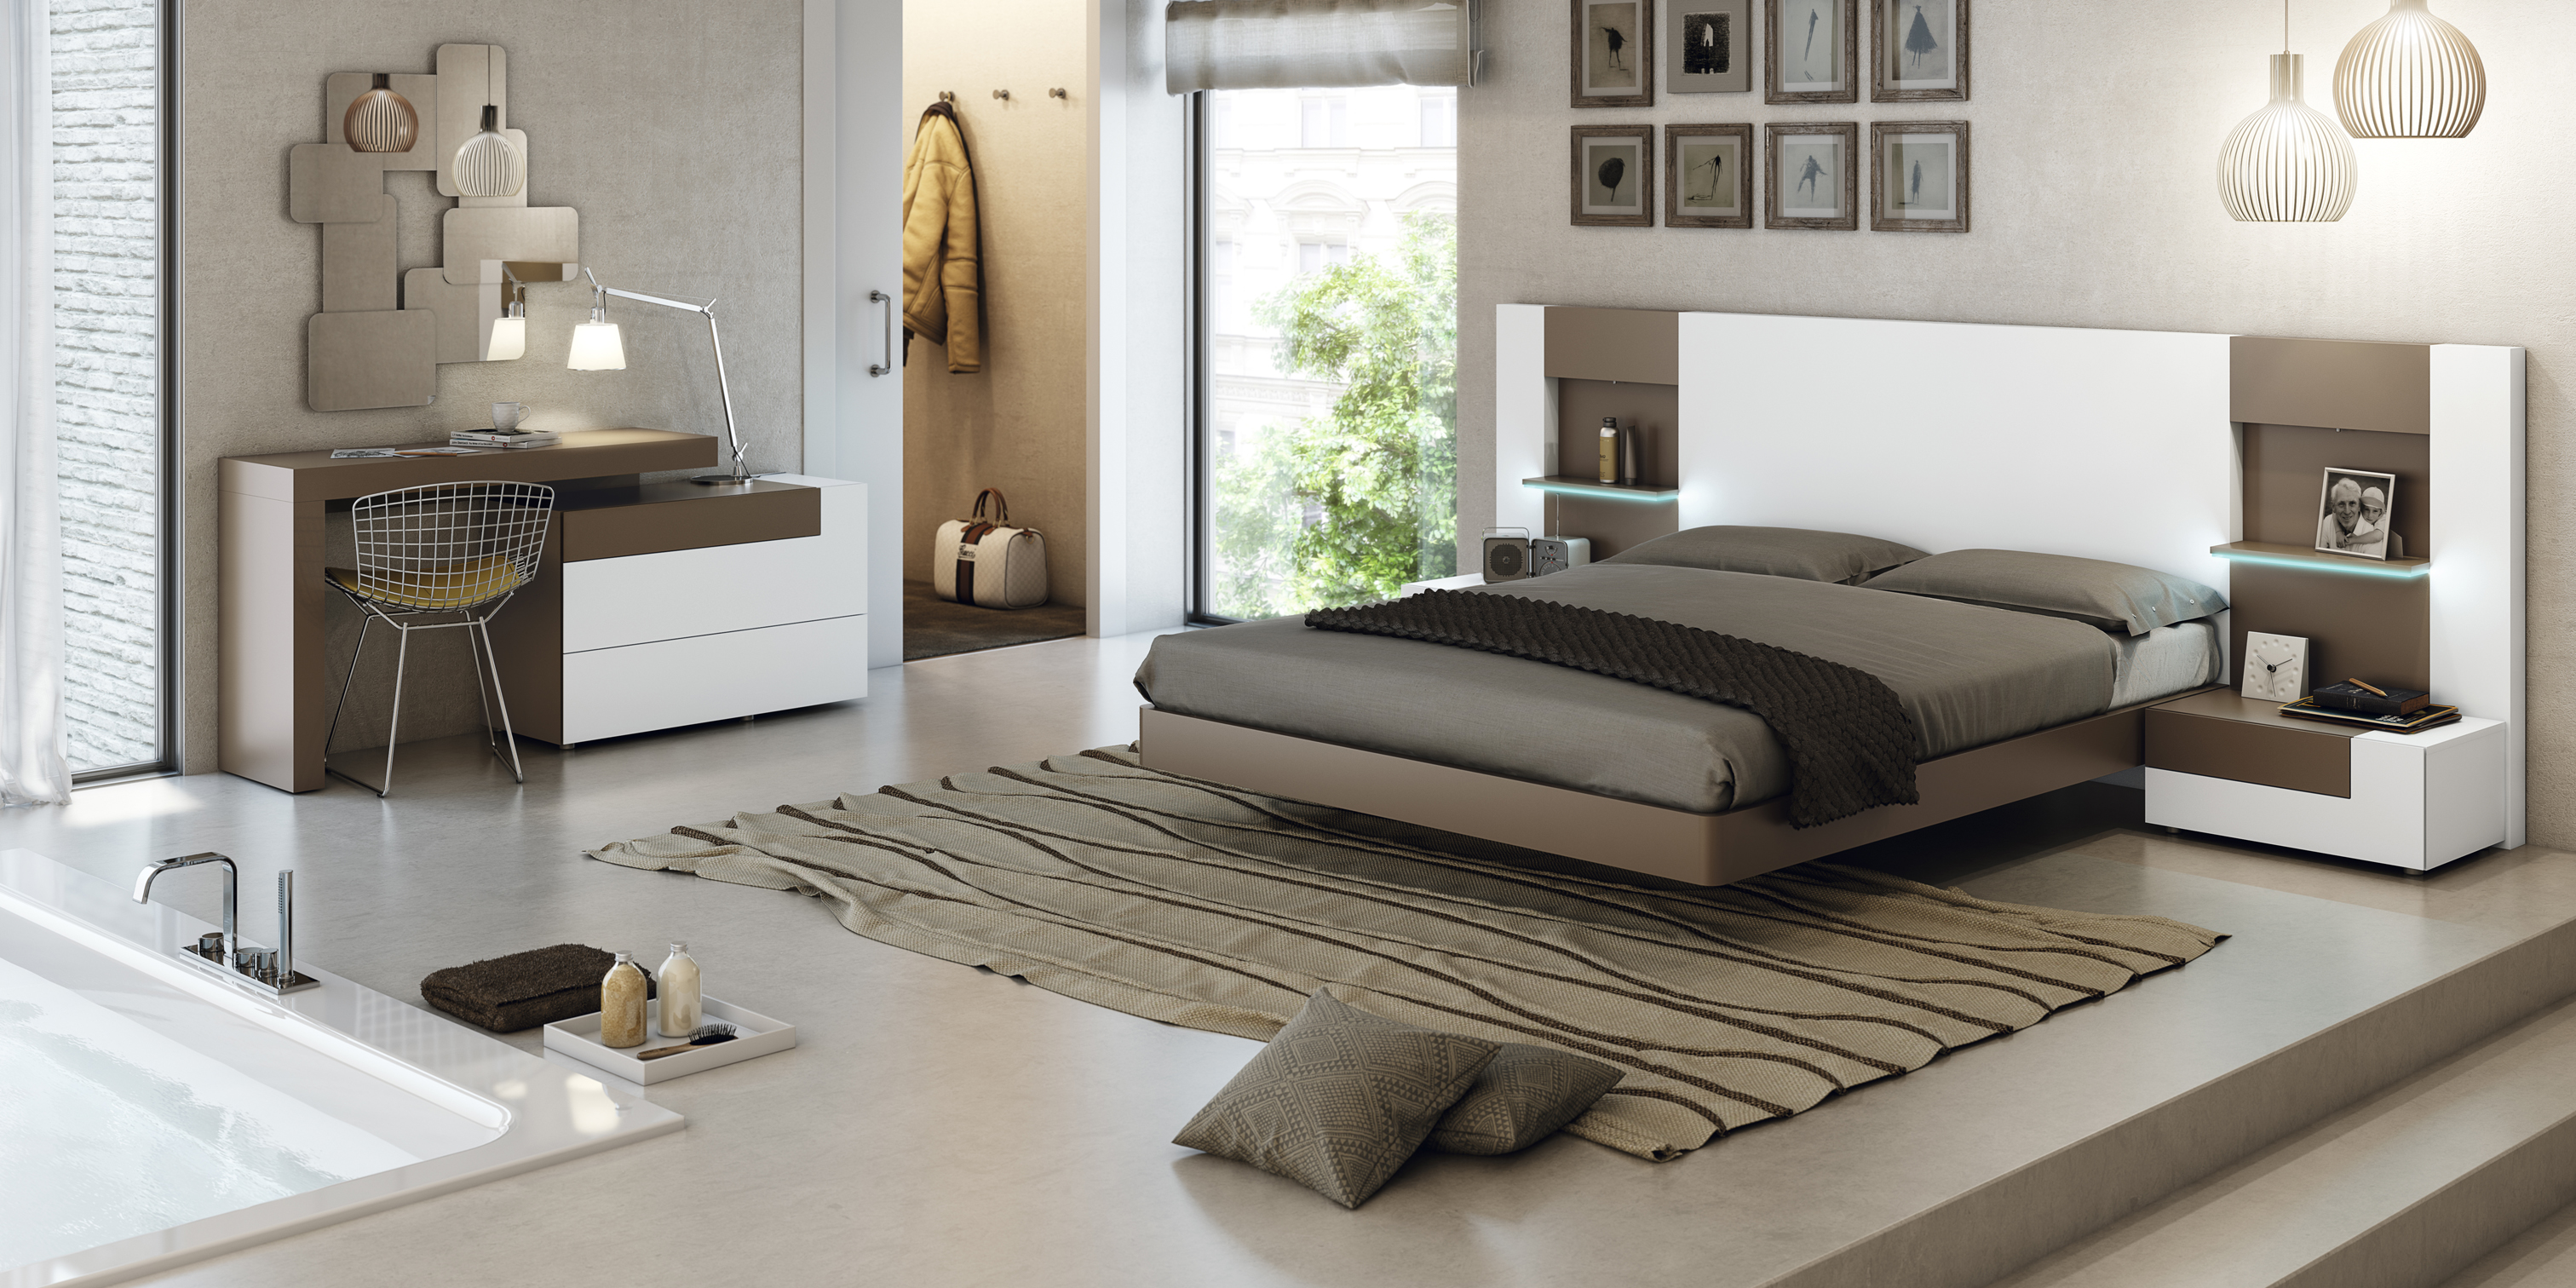 Fashionable Quality Luxury Platform Bed